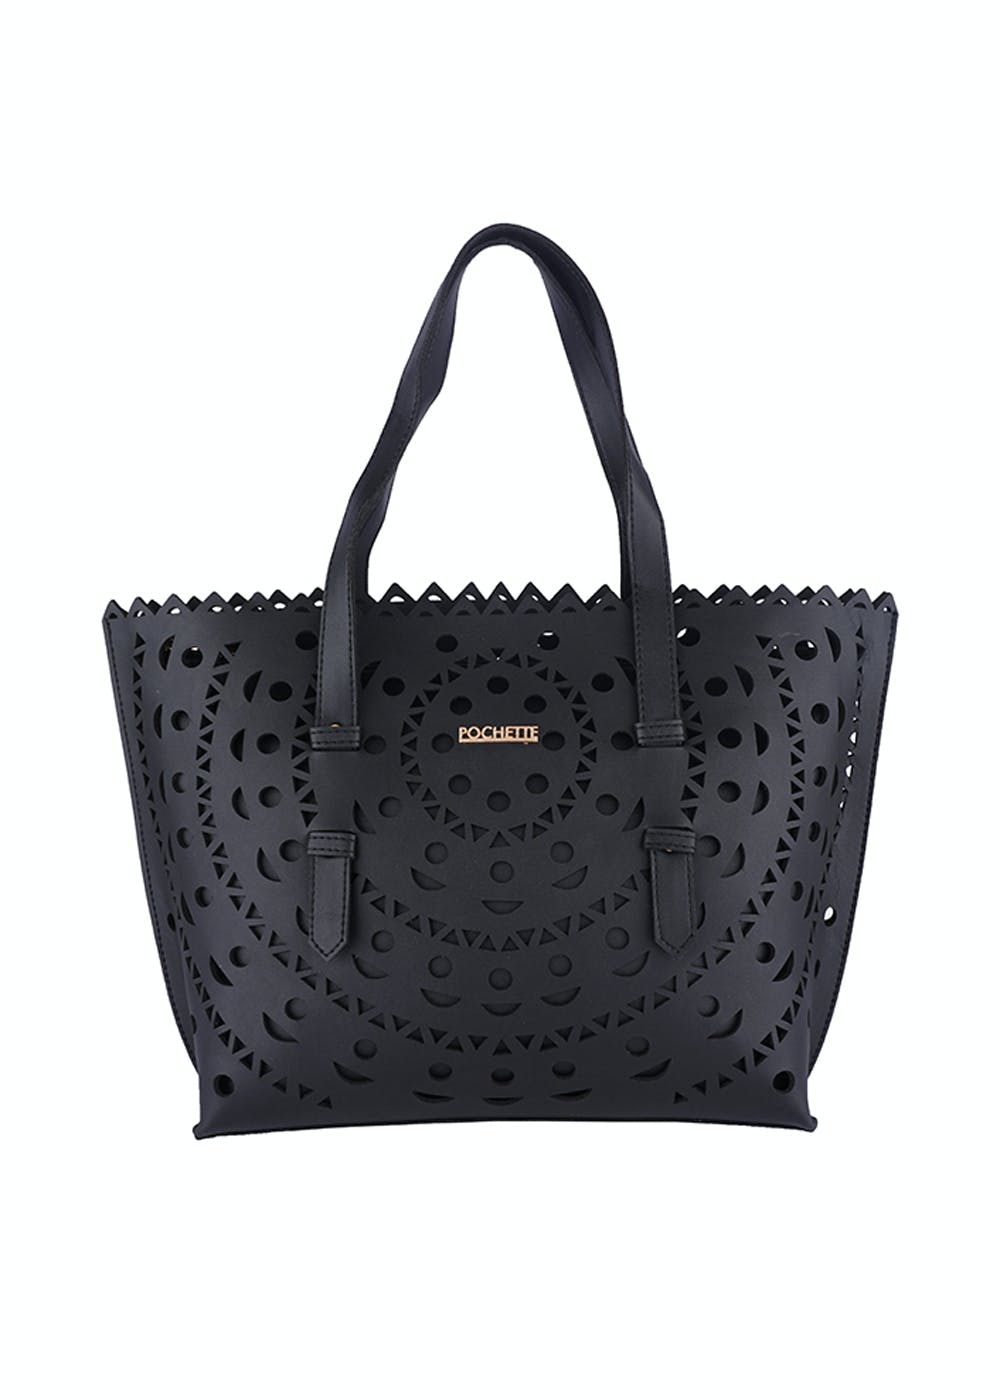 Luxury handbag - Jimmy Choo black leather purse bag with metallic studs